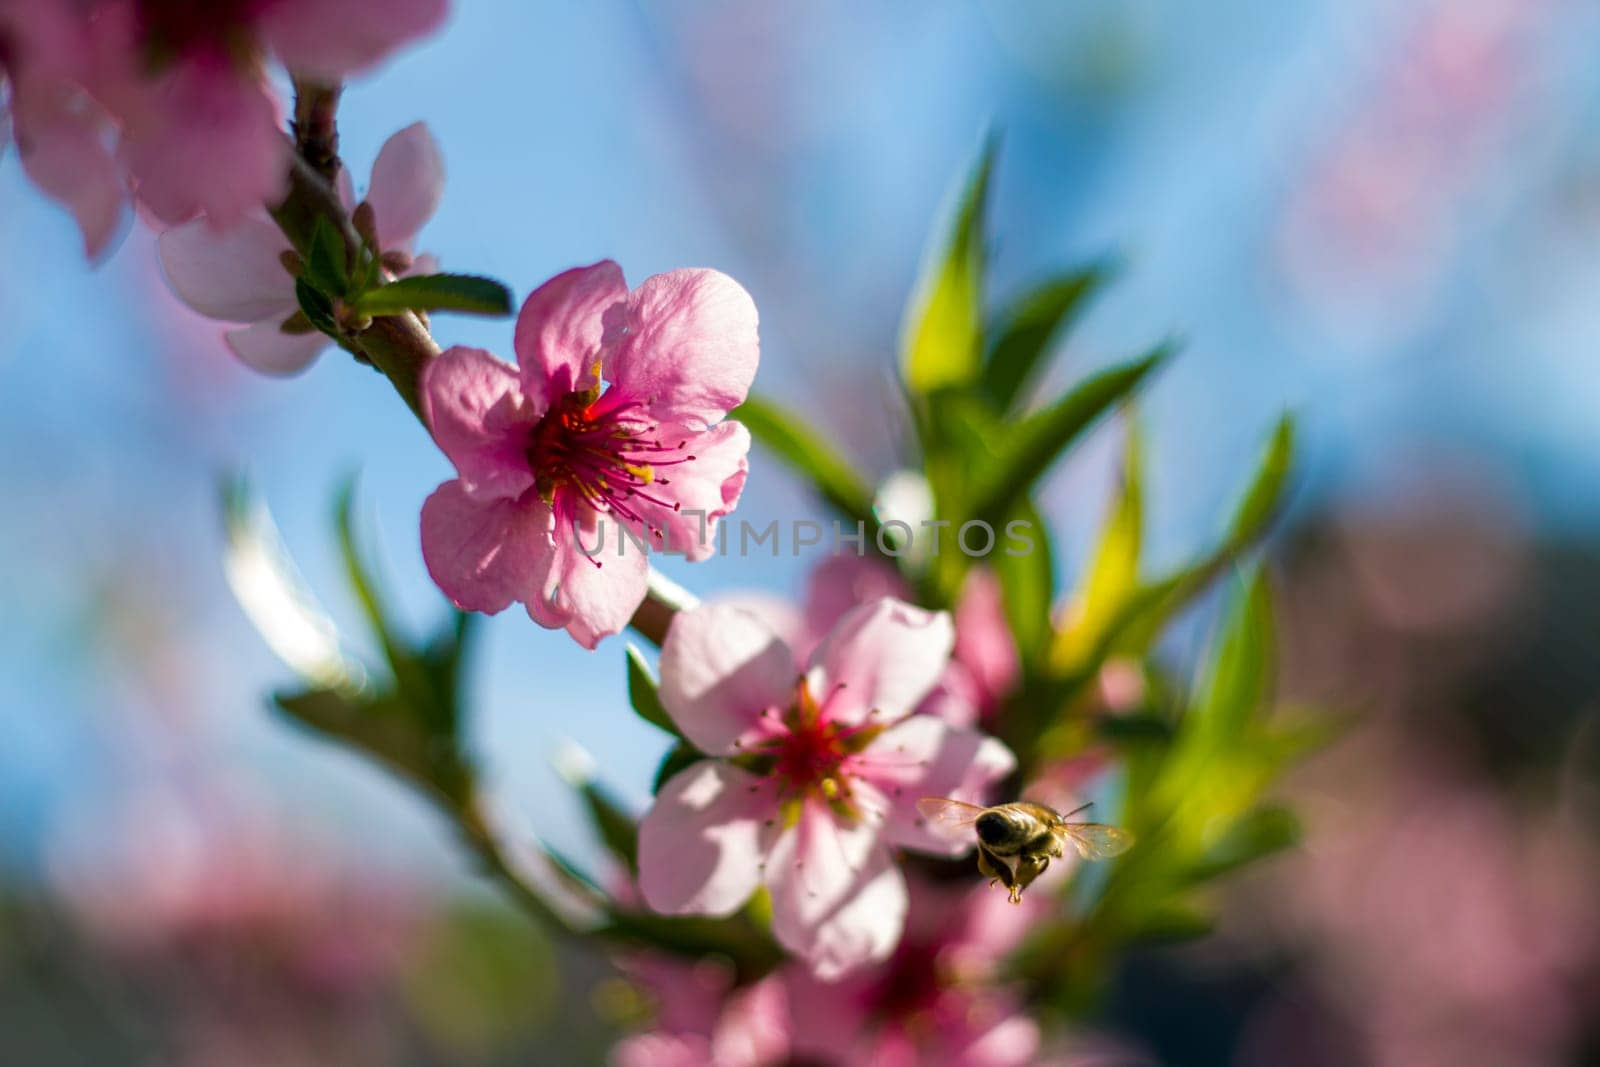 Bee pollinates flower blossom of nectarine peach by romvo